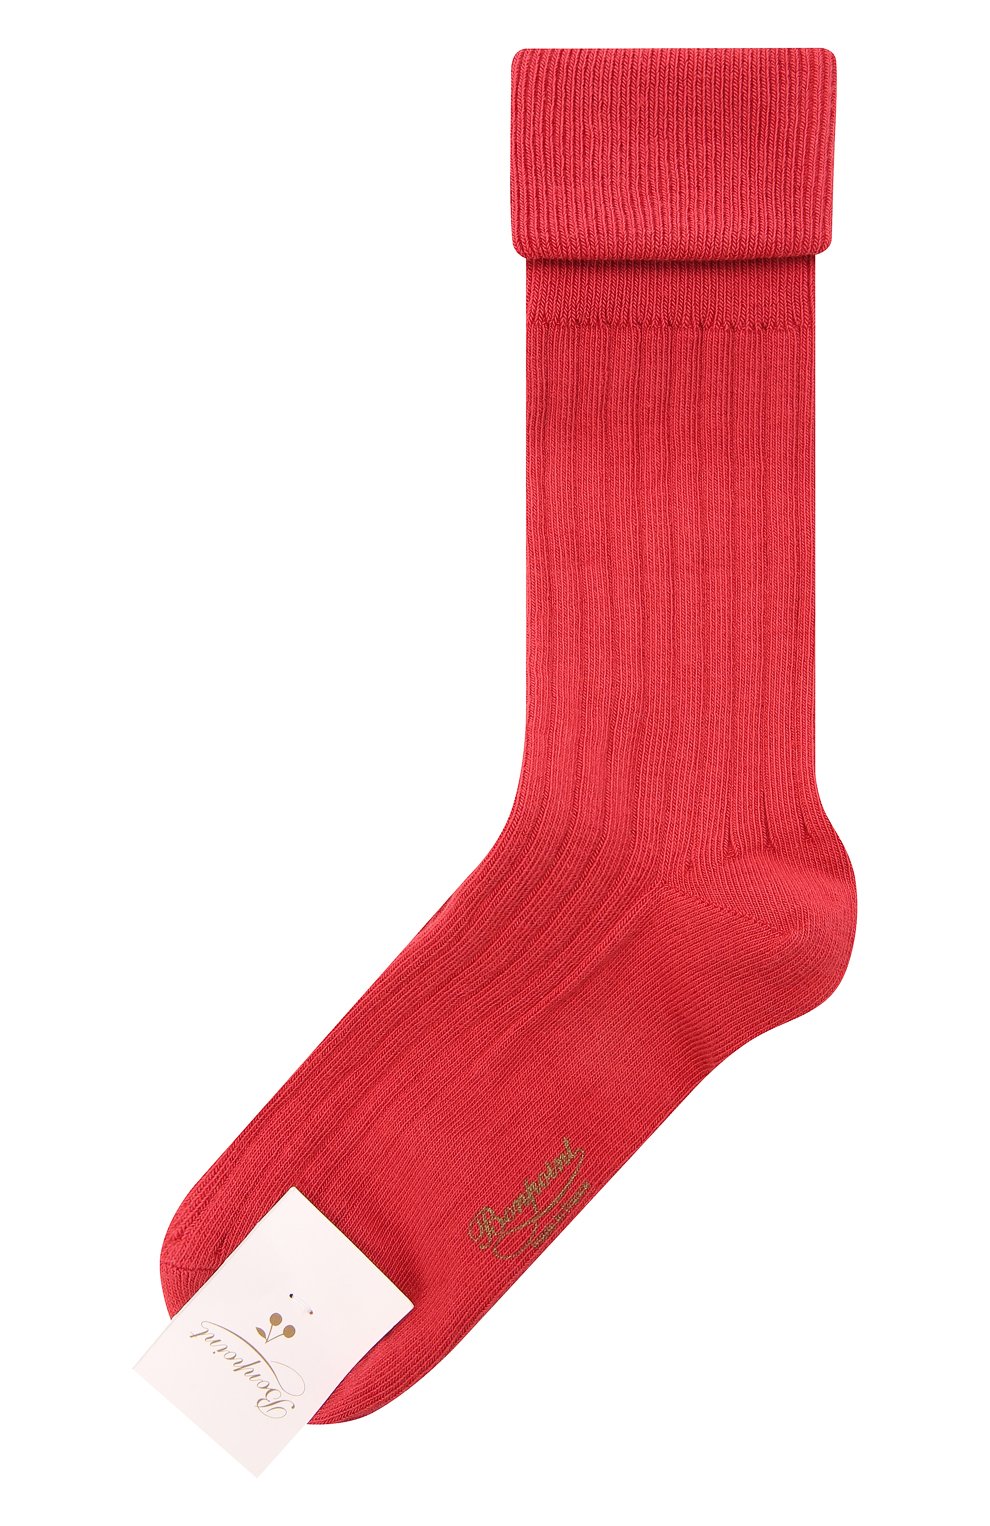 Детские носки BONPOINT красного цвета, арт. H19BGICOTFIF(050A)_540407 | Фото 1 (Материал: Текстиль, Хлопок; Кросс-КТ: Носки)